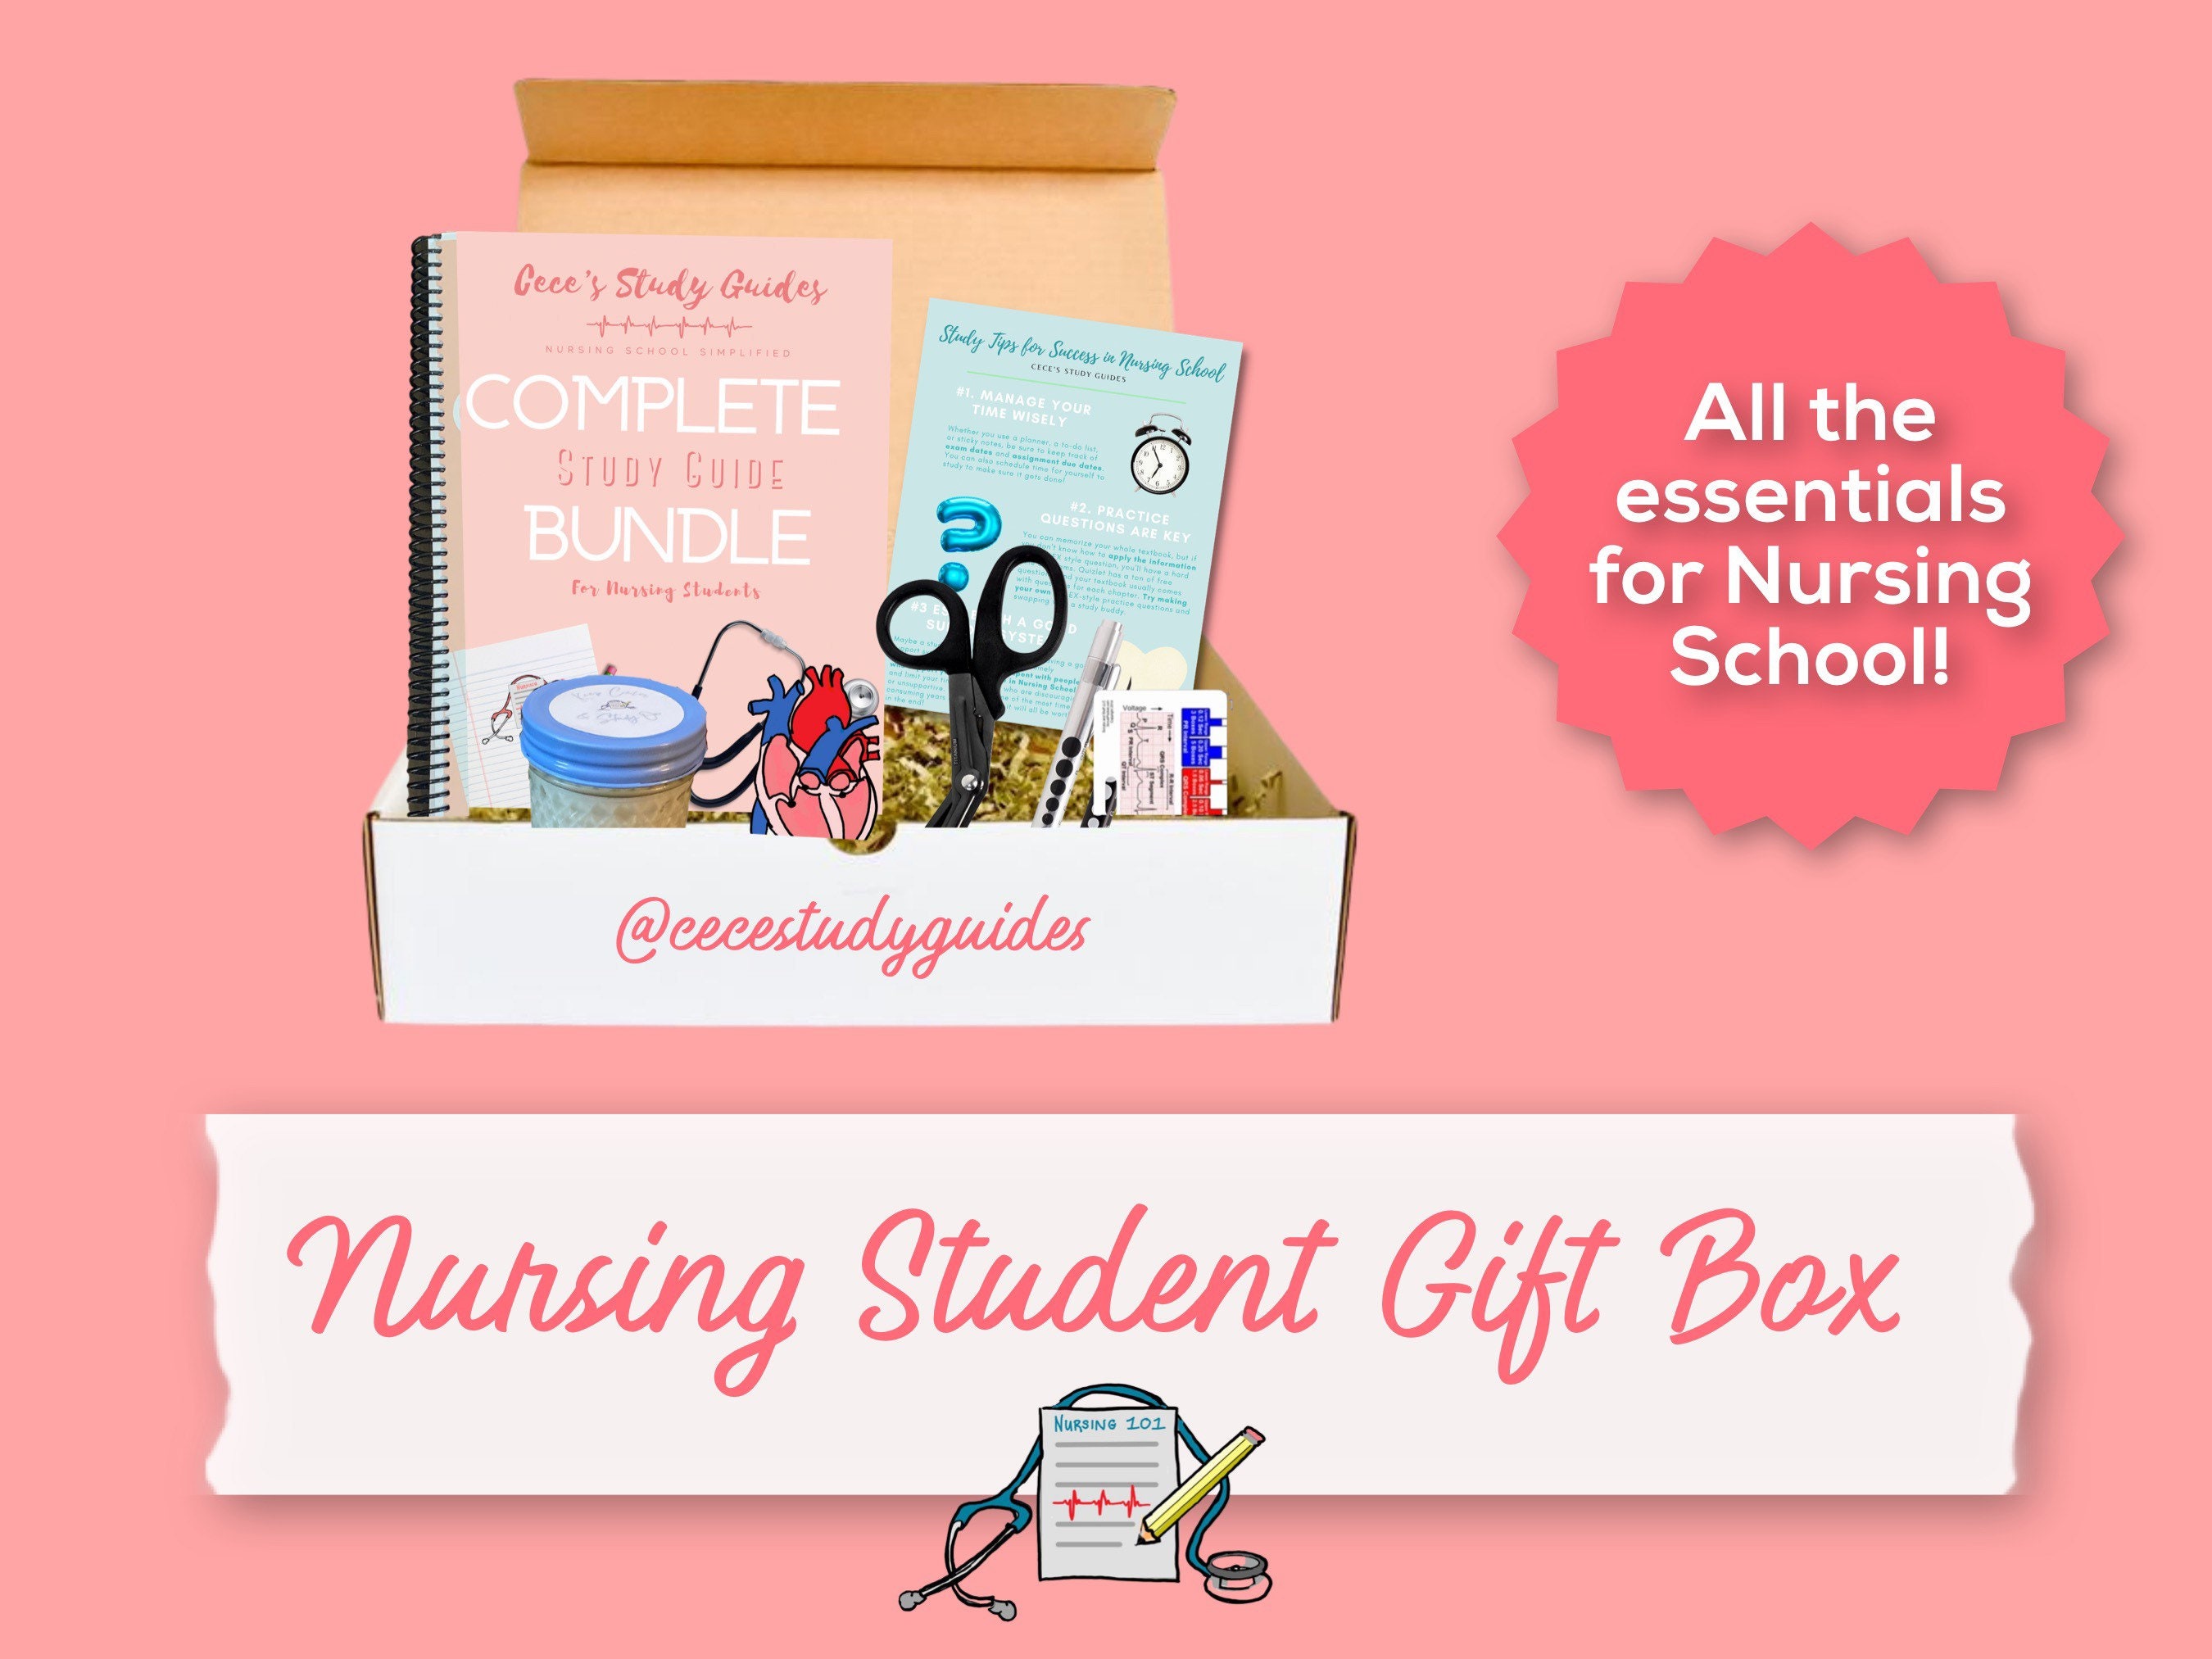 EMI Nursing Essentials Nurse Starter Kit - 10 Pieces Total